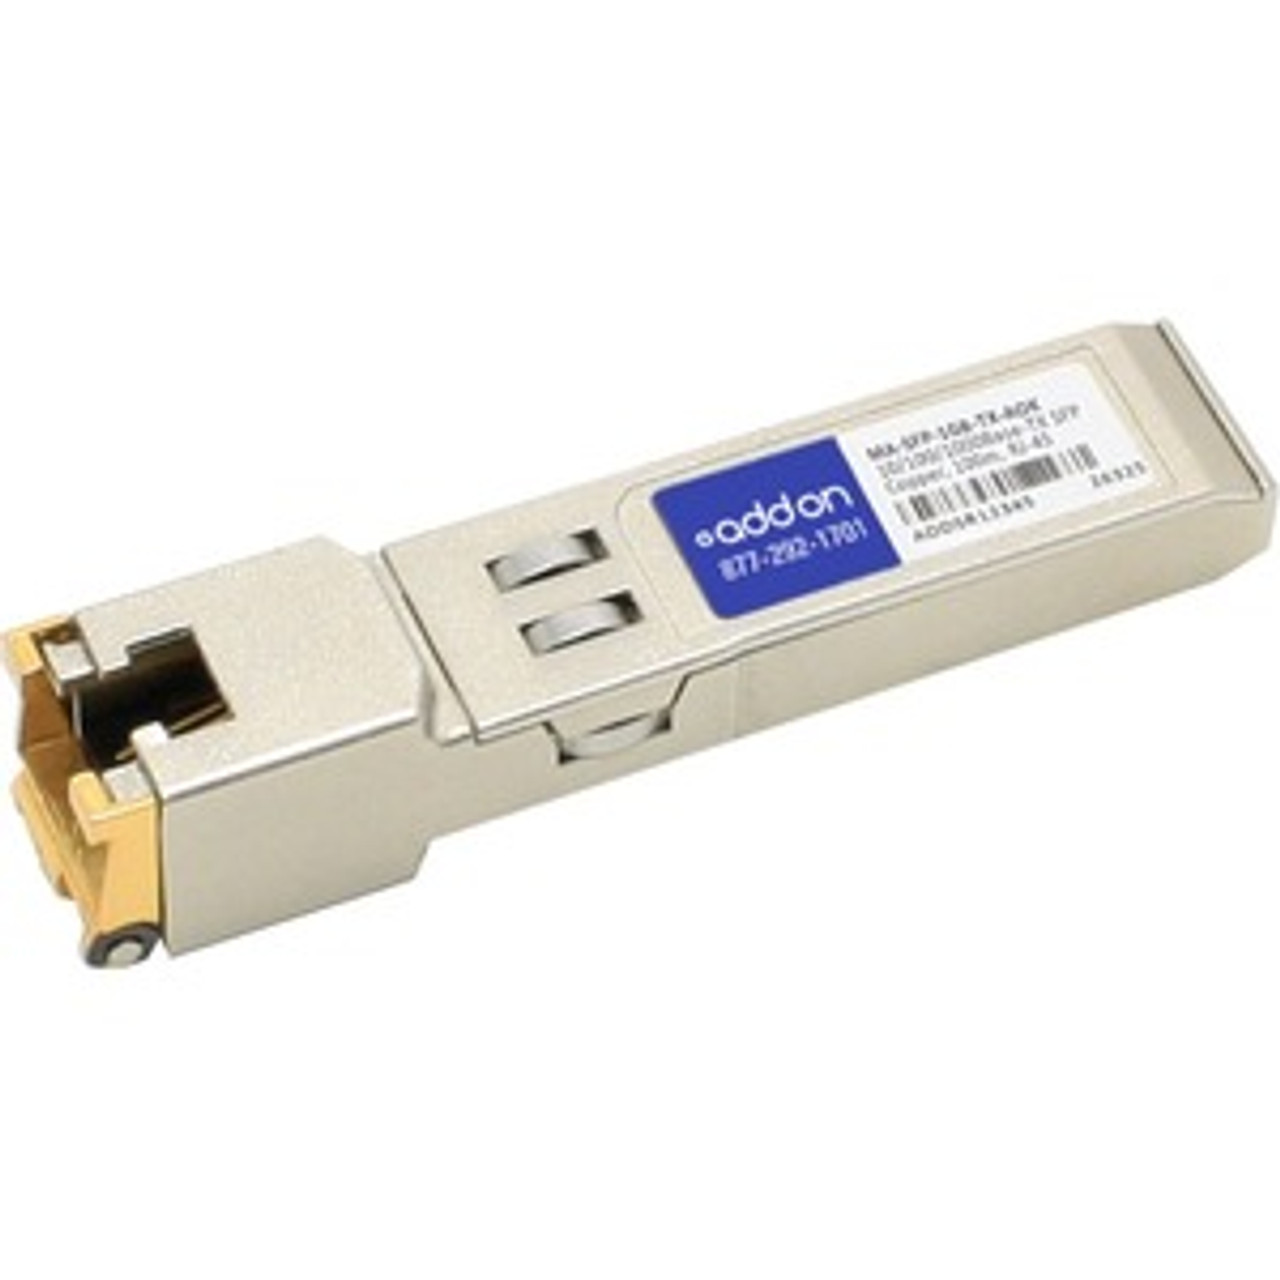 MA-SFP-1GB-TX-AOK AddOn 1Gbps 1000Base-TX Copper 100m RJ-45 Connector SFP Transceiver Module for Meraki Compatible